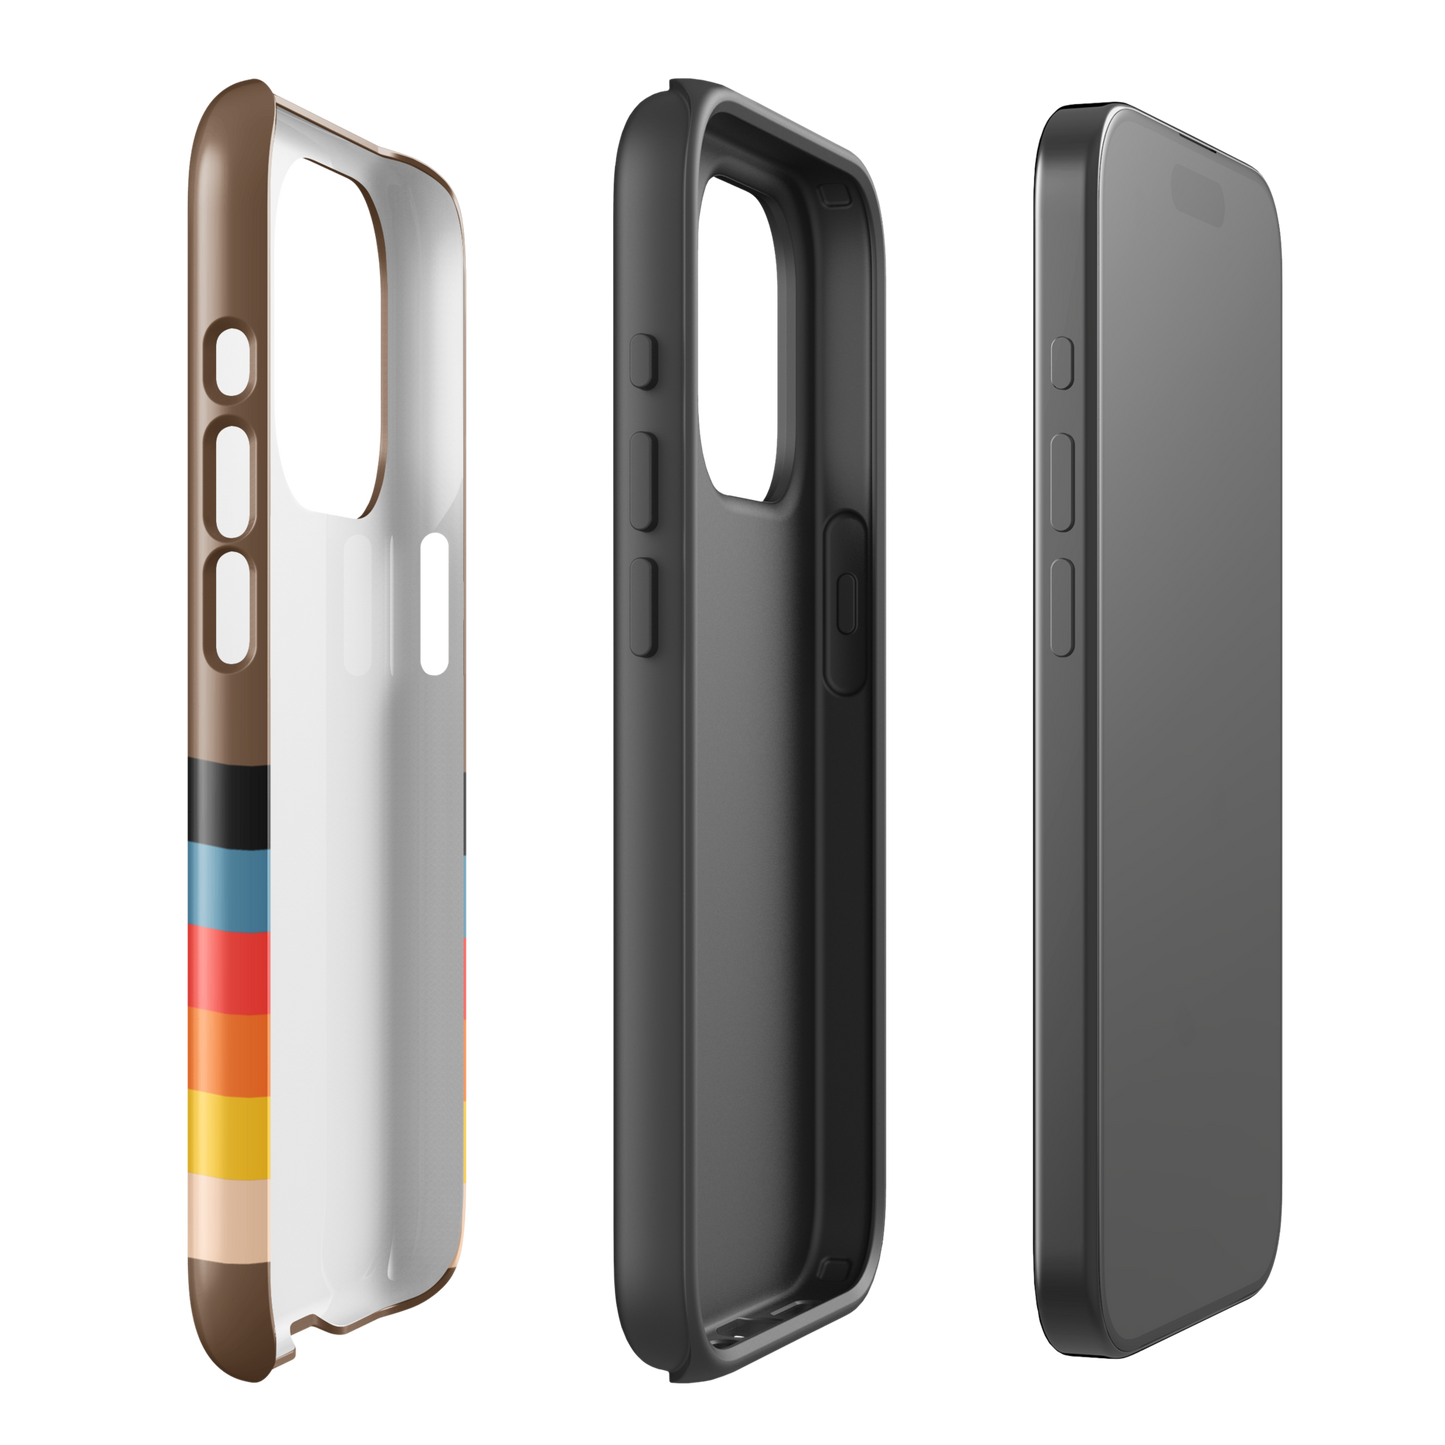 SmartLess Stripes Tough Phone Case - iPhone